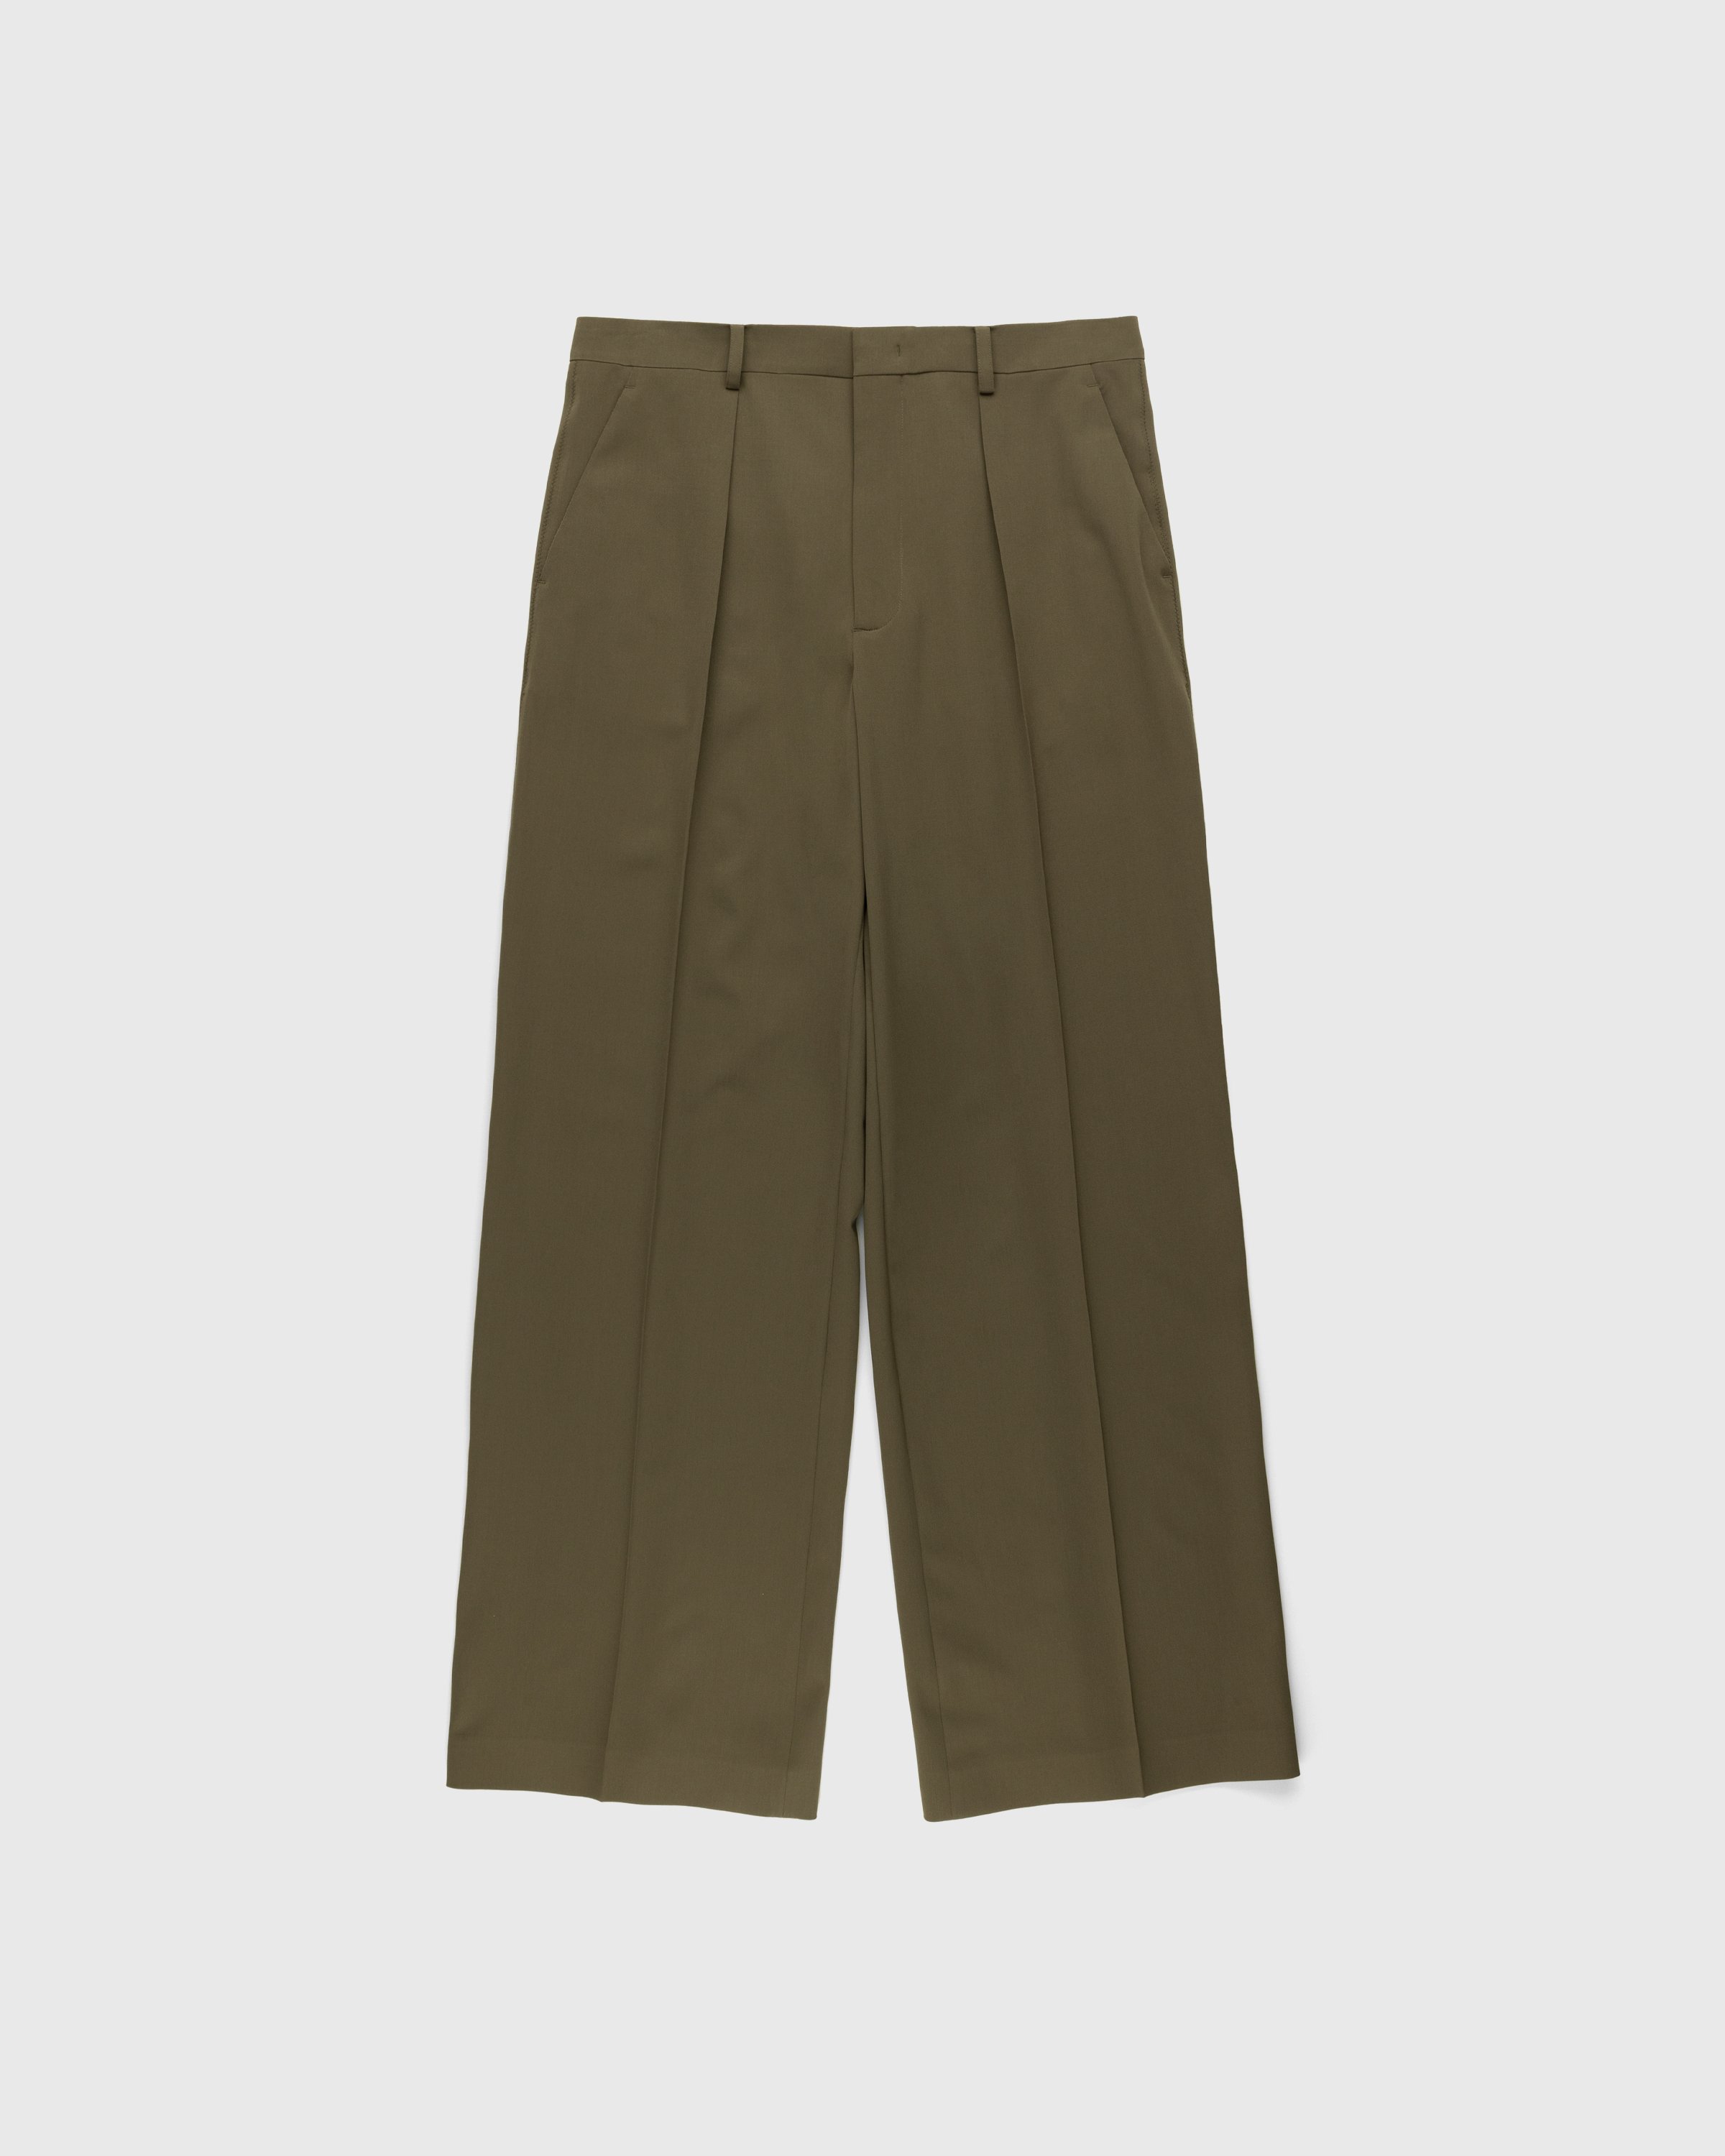 Jean Paul Gaultier - Classic Woven Trouser Khaki - Clothing - Brown - Image 1